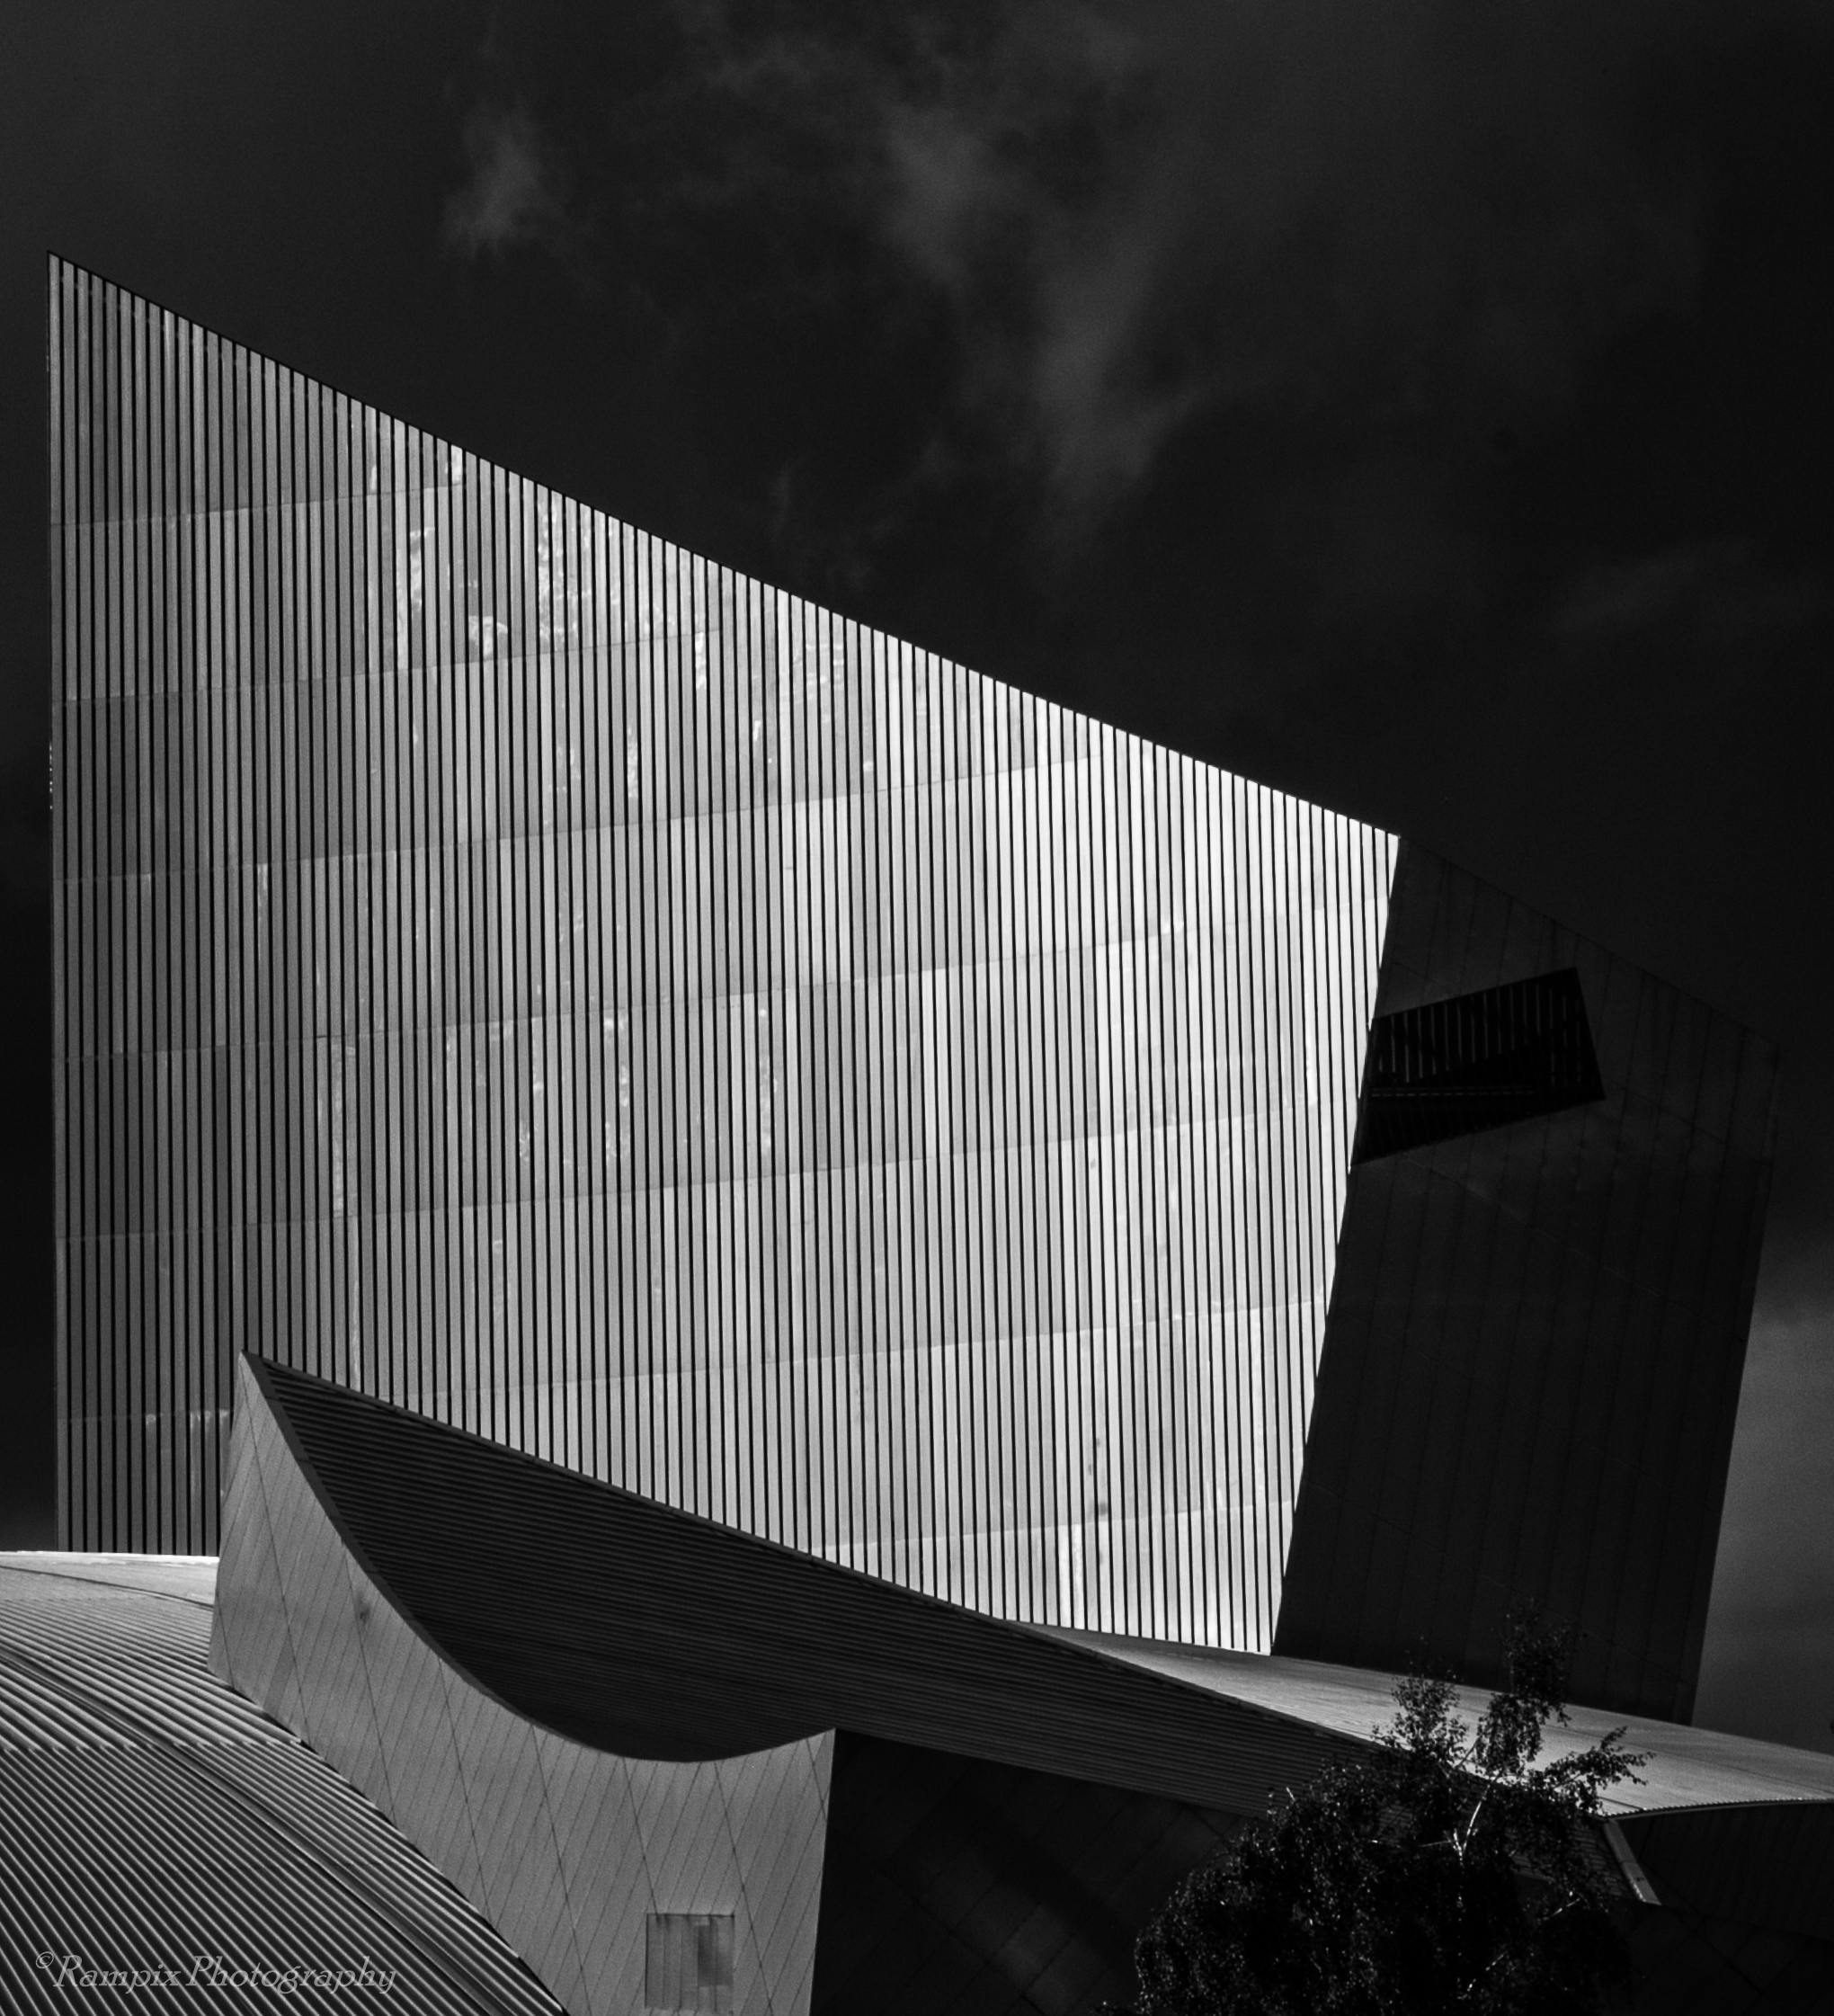 Free stock photo of modern architecture, monochrome